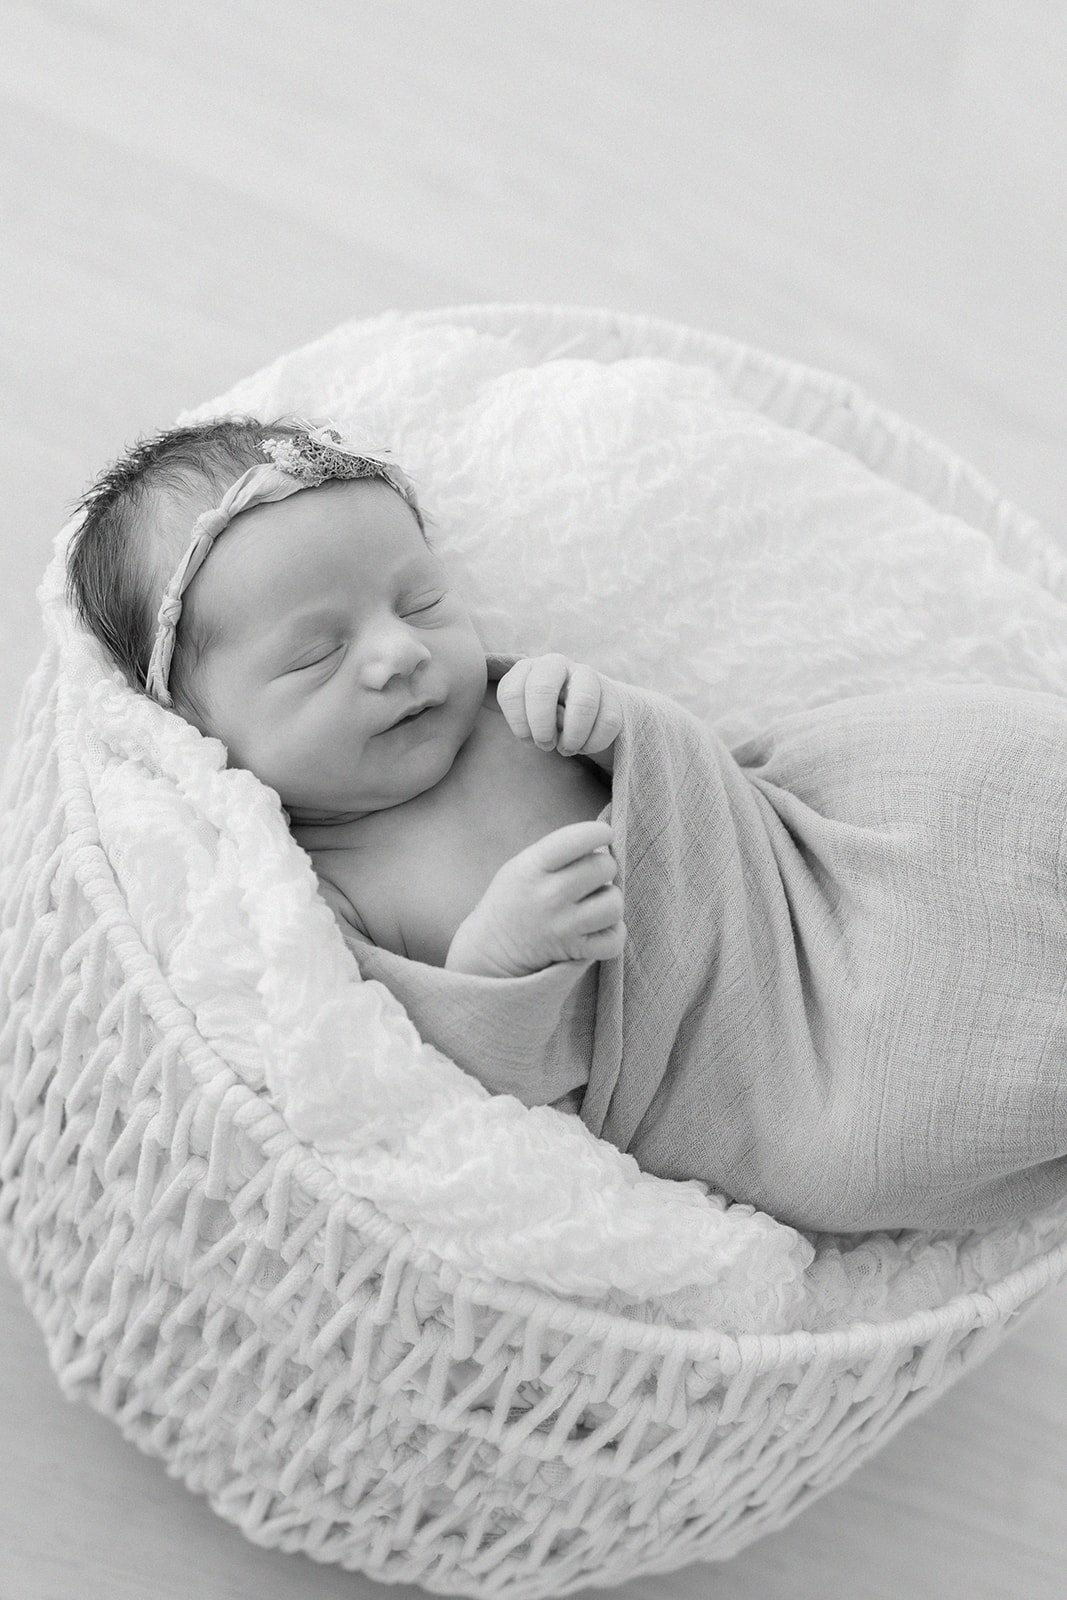 houston-newborn-photographer-kimberly-brooke-lifestlye-baby-357.jpg